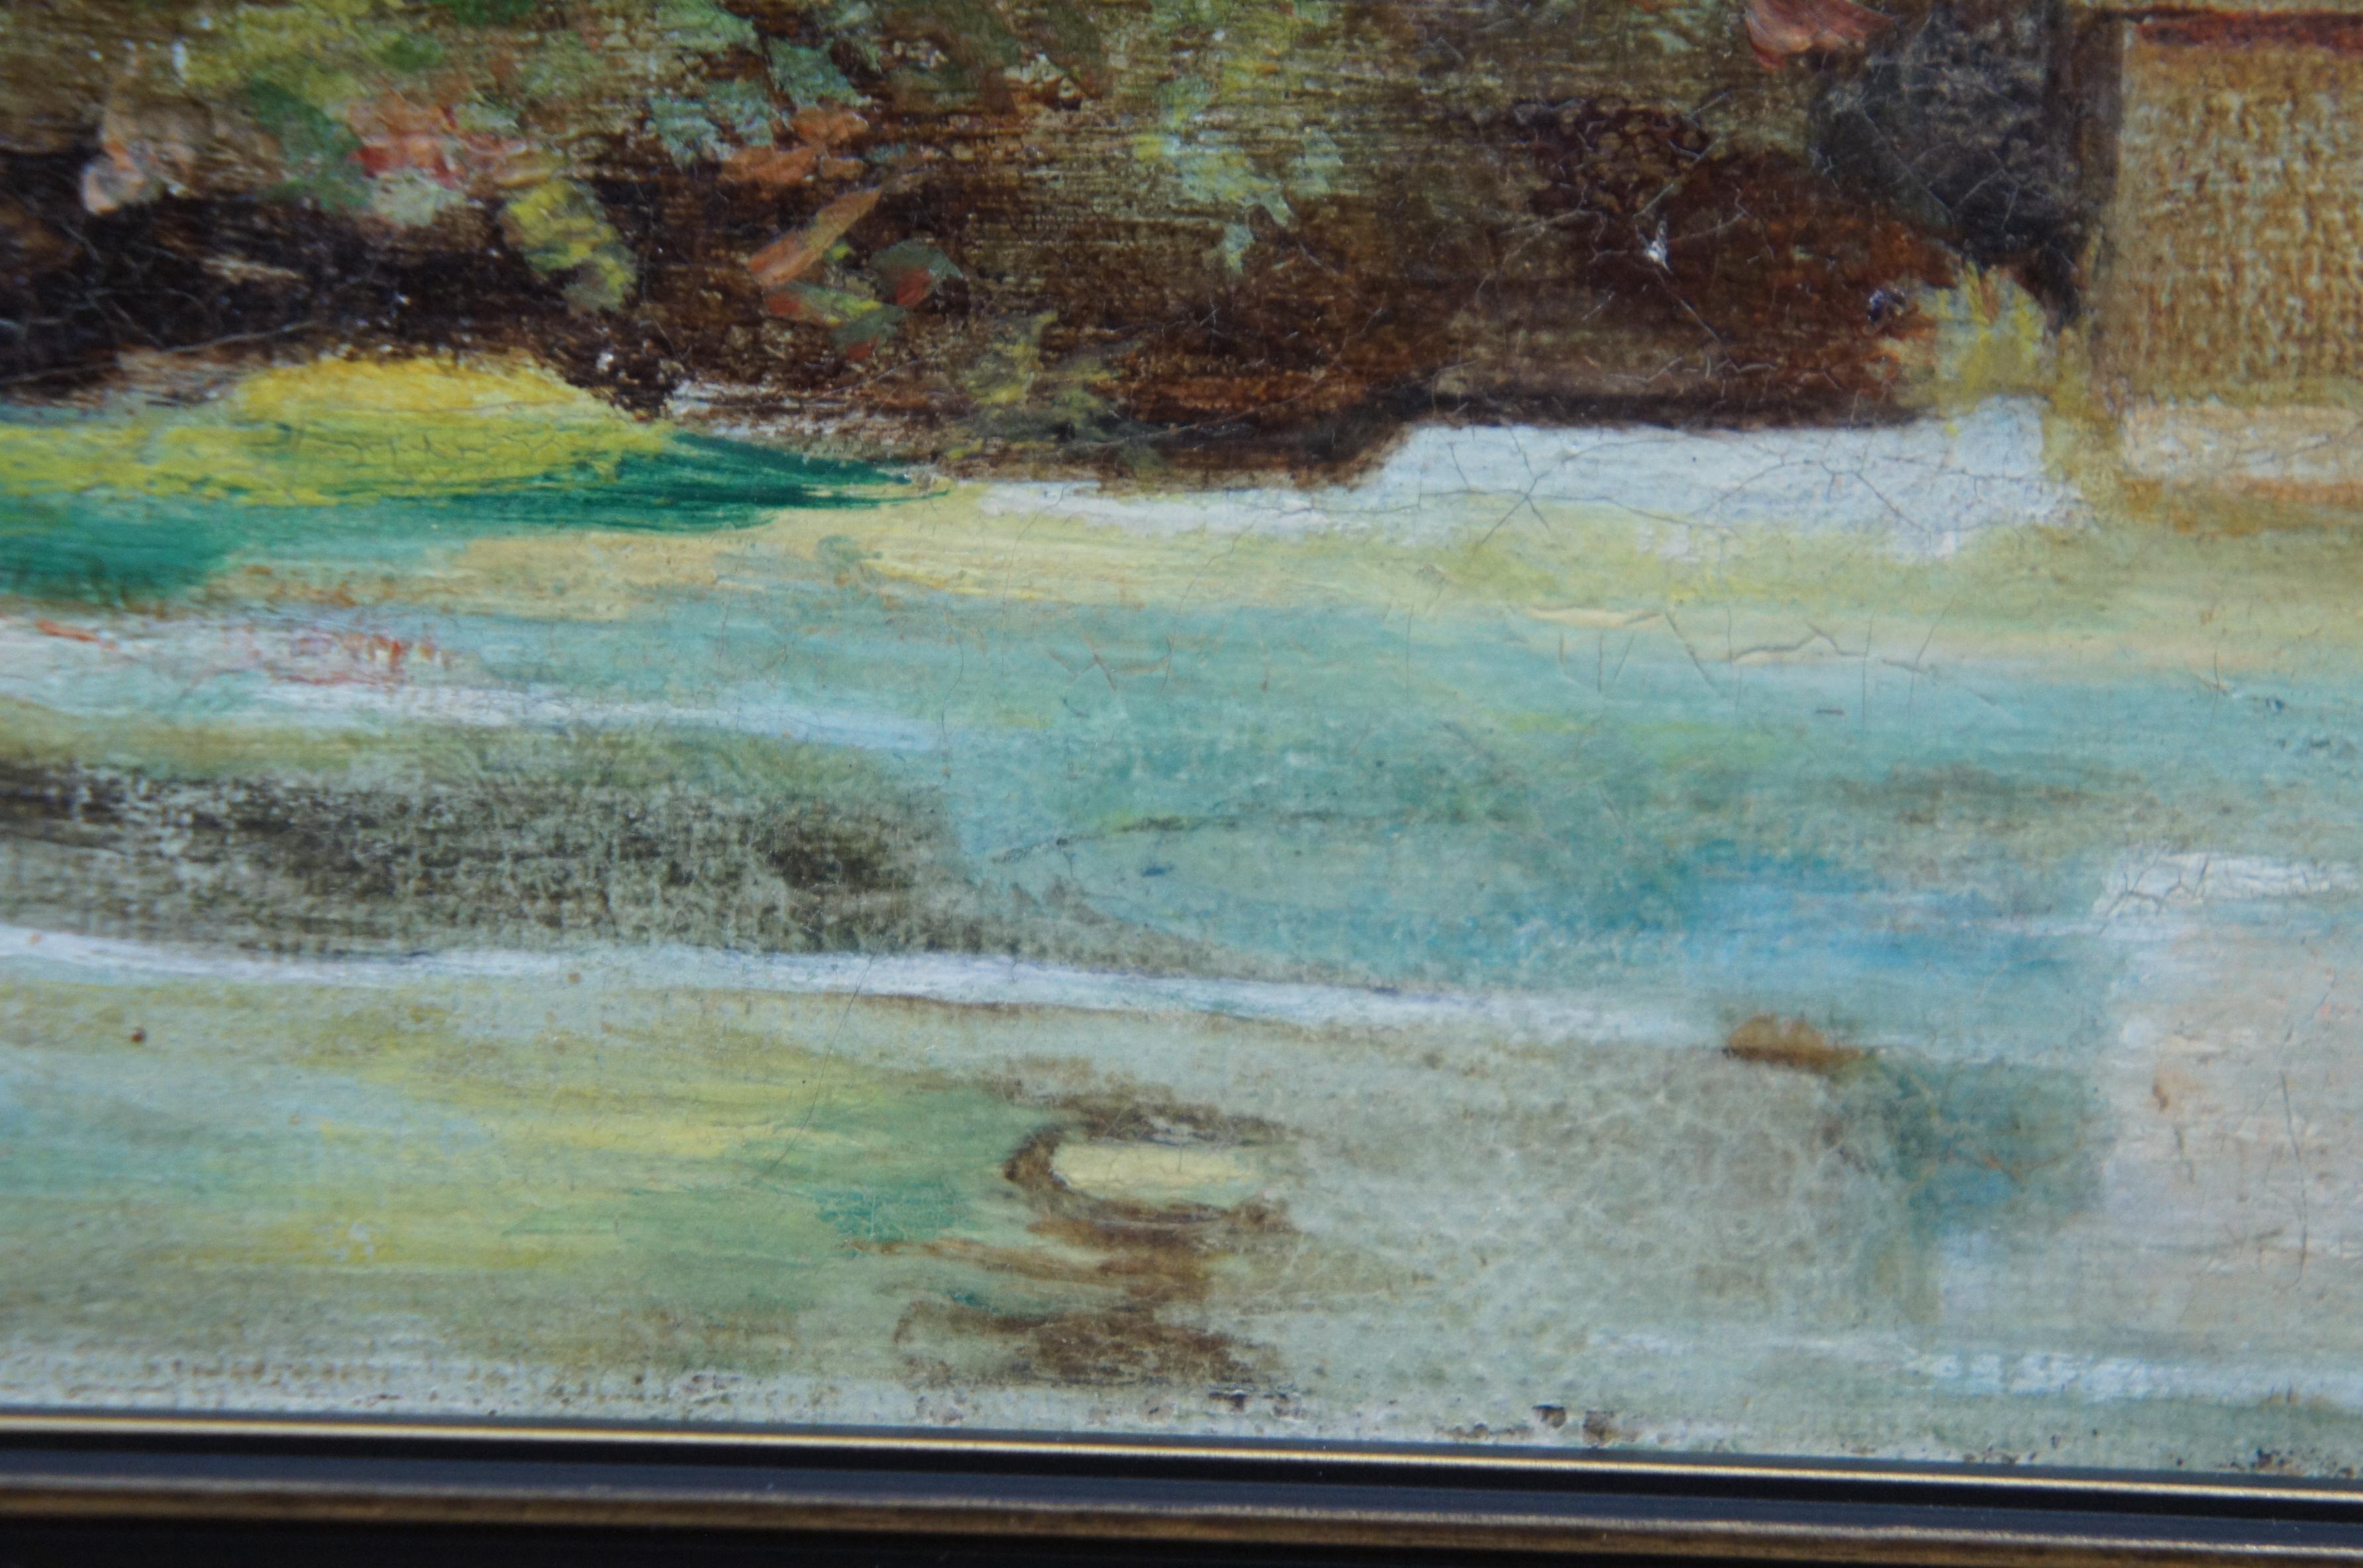 N.C. Wyeth Oil Painting University Landscape Gothic Architecture 5